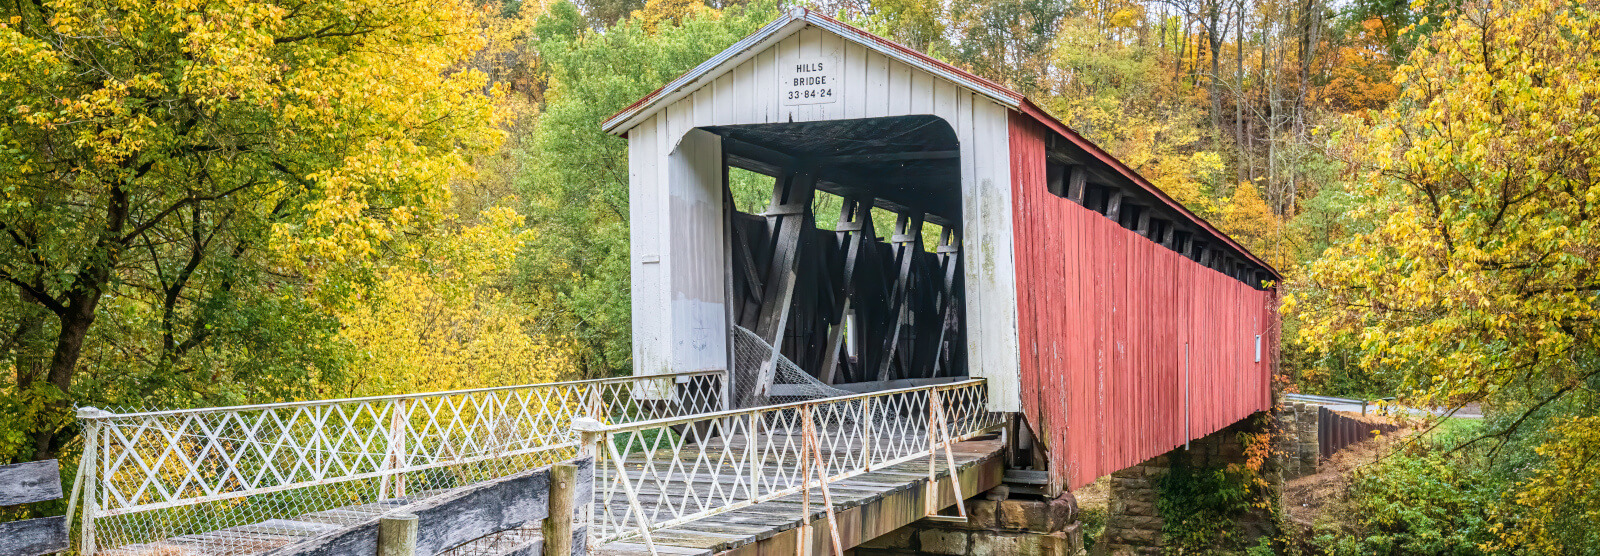 covered bridges in Washington County Ohio